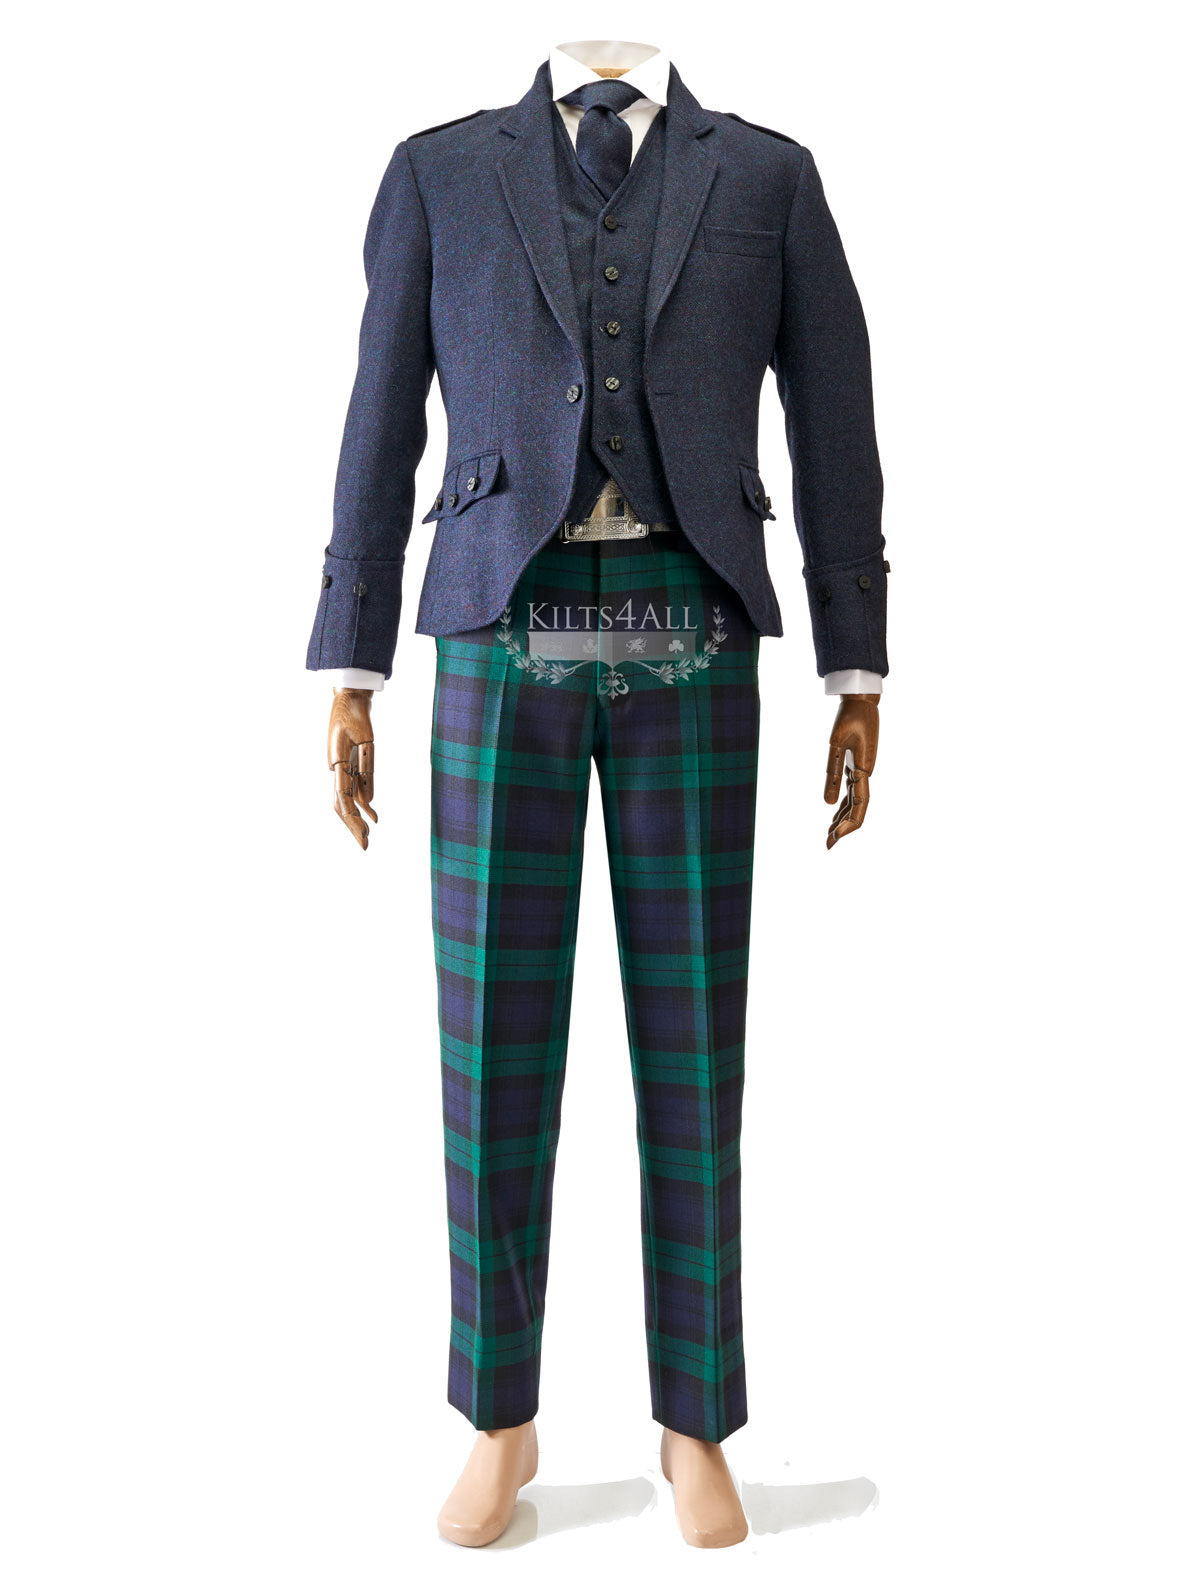 Mens Scottish Tartan Trews Outfit to Hire - Lightweight Navy Tweed Argyll Jacket & Waistcoat